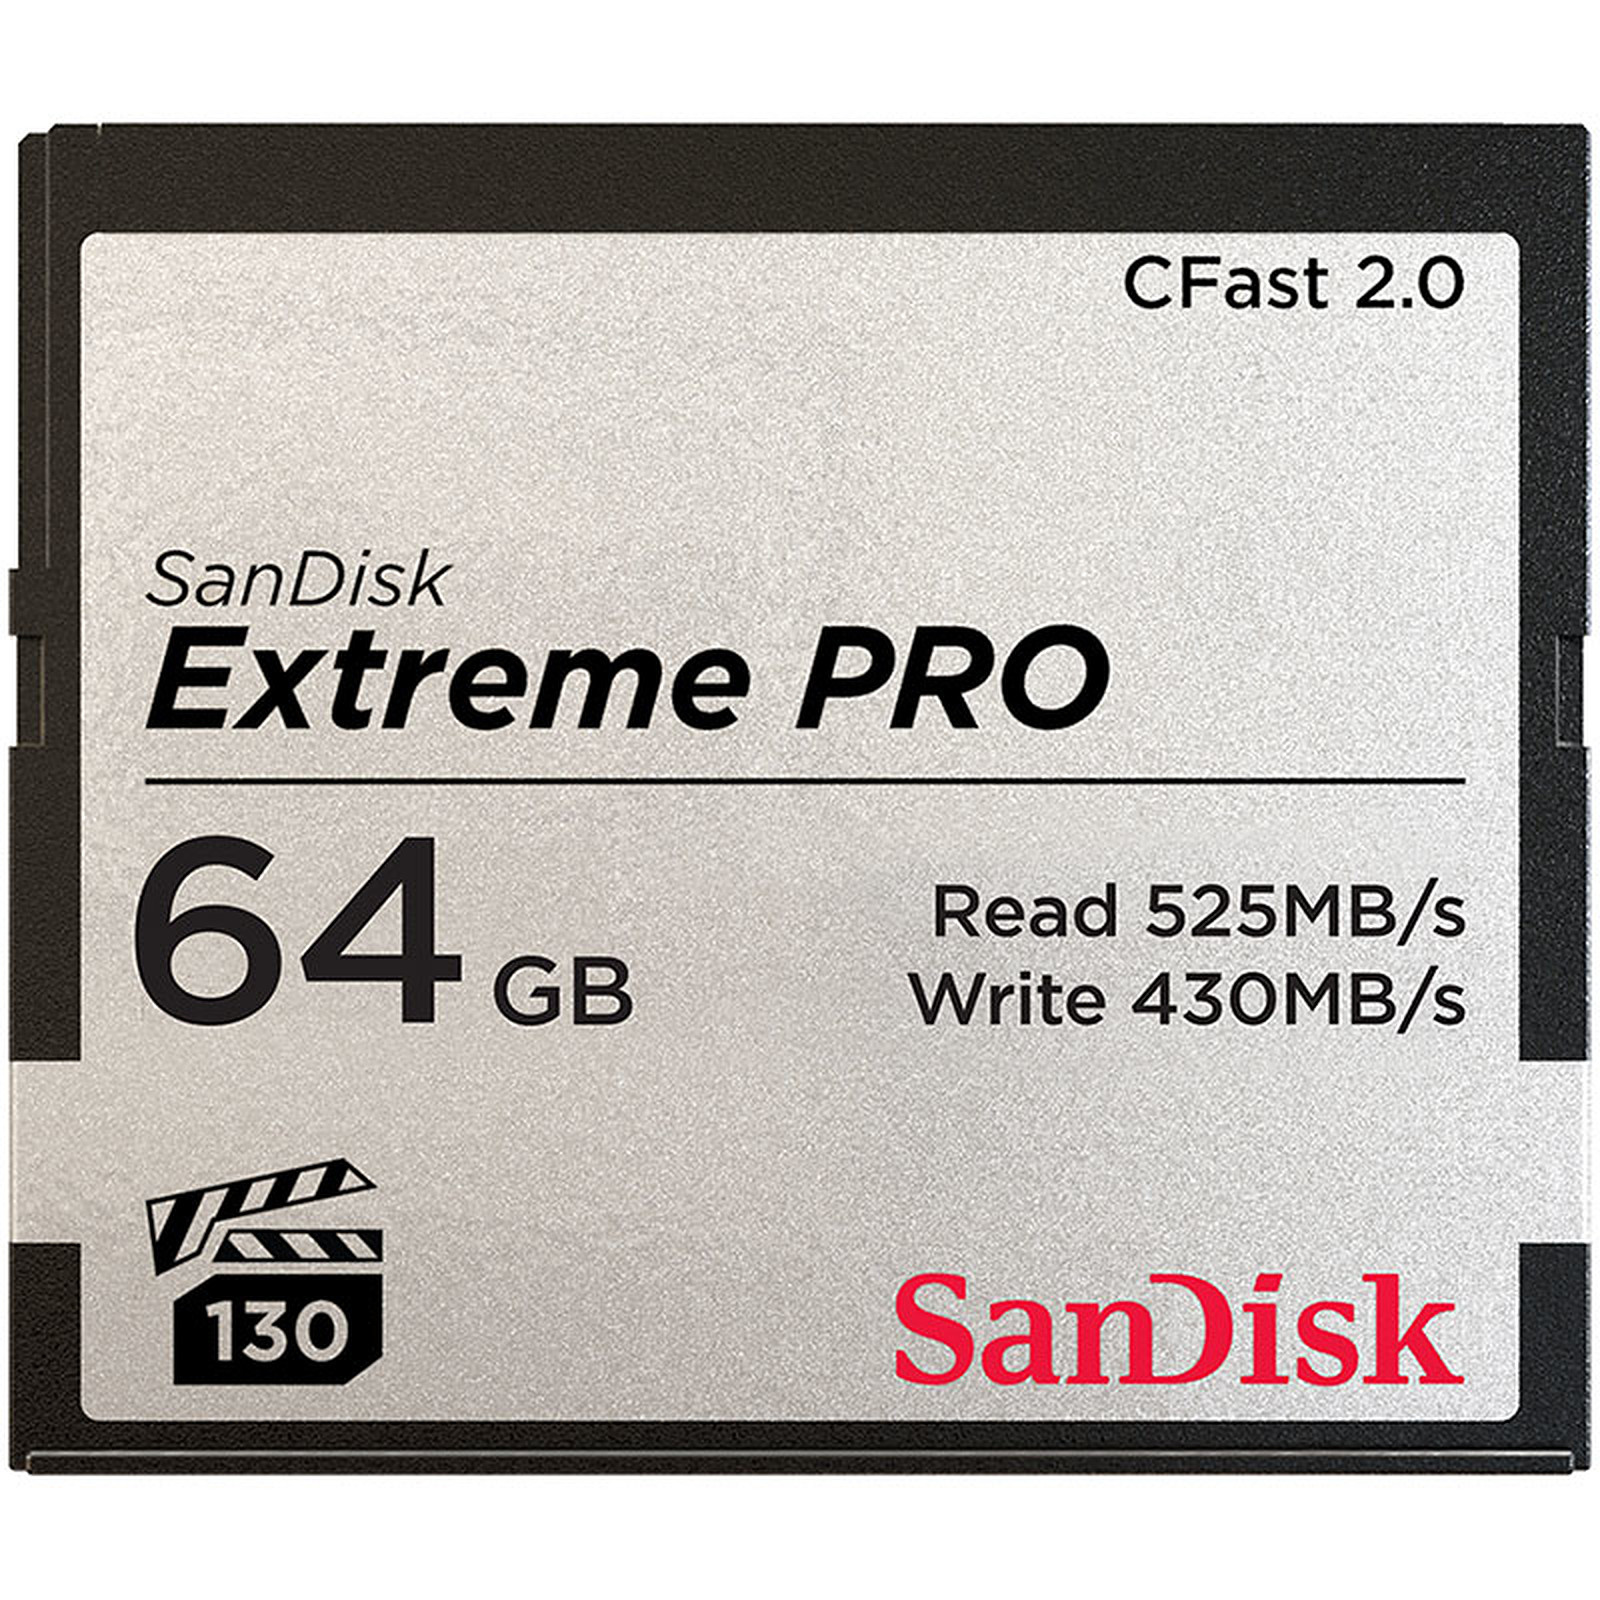 SanDisk Carte memoire Extreme Pro CompactFlash CFast 2.0 64 Go - Carte memoire Sandisk